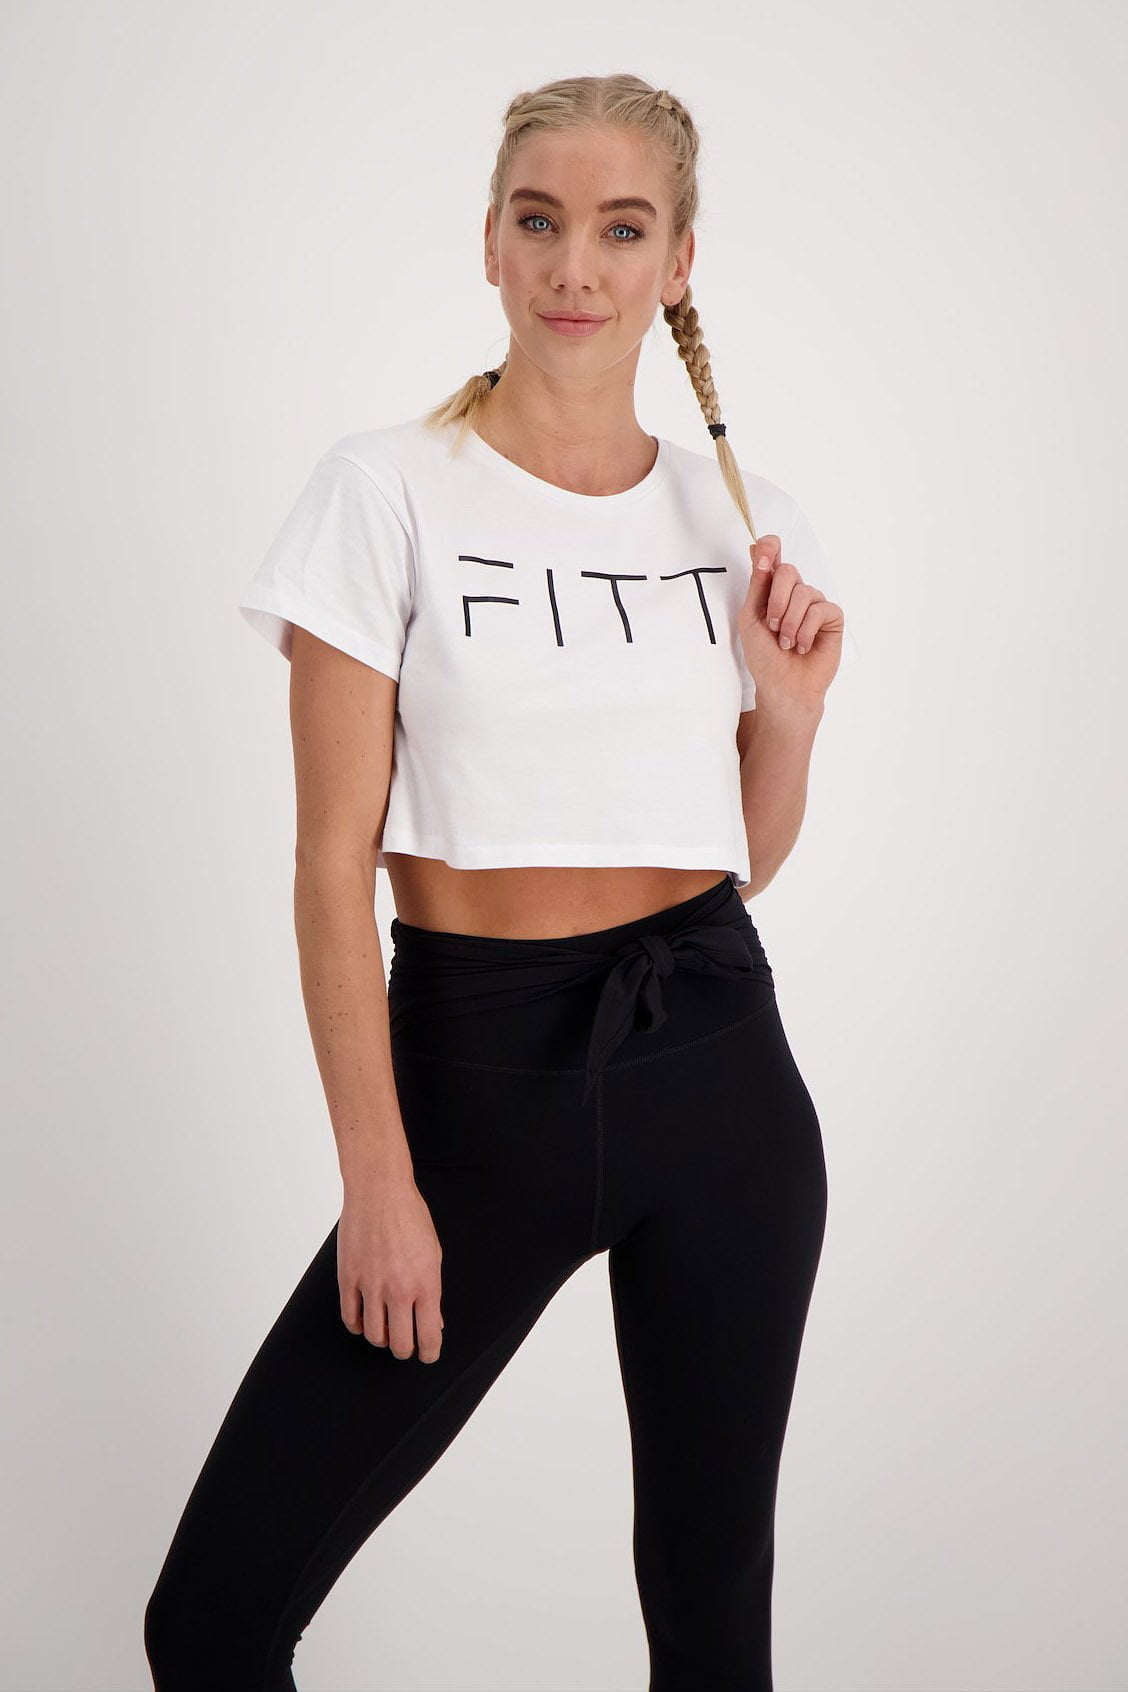 Athleisure Crop T-shirt White - Women's Sports Tops - FITTwear.co.uk